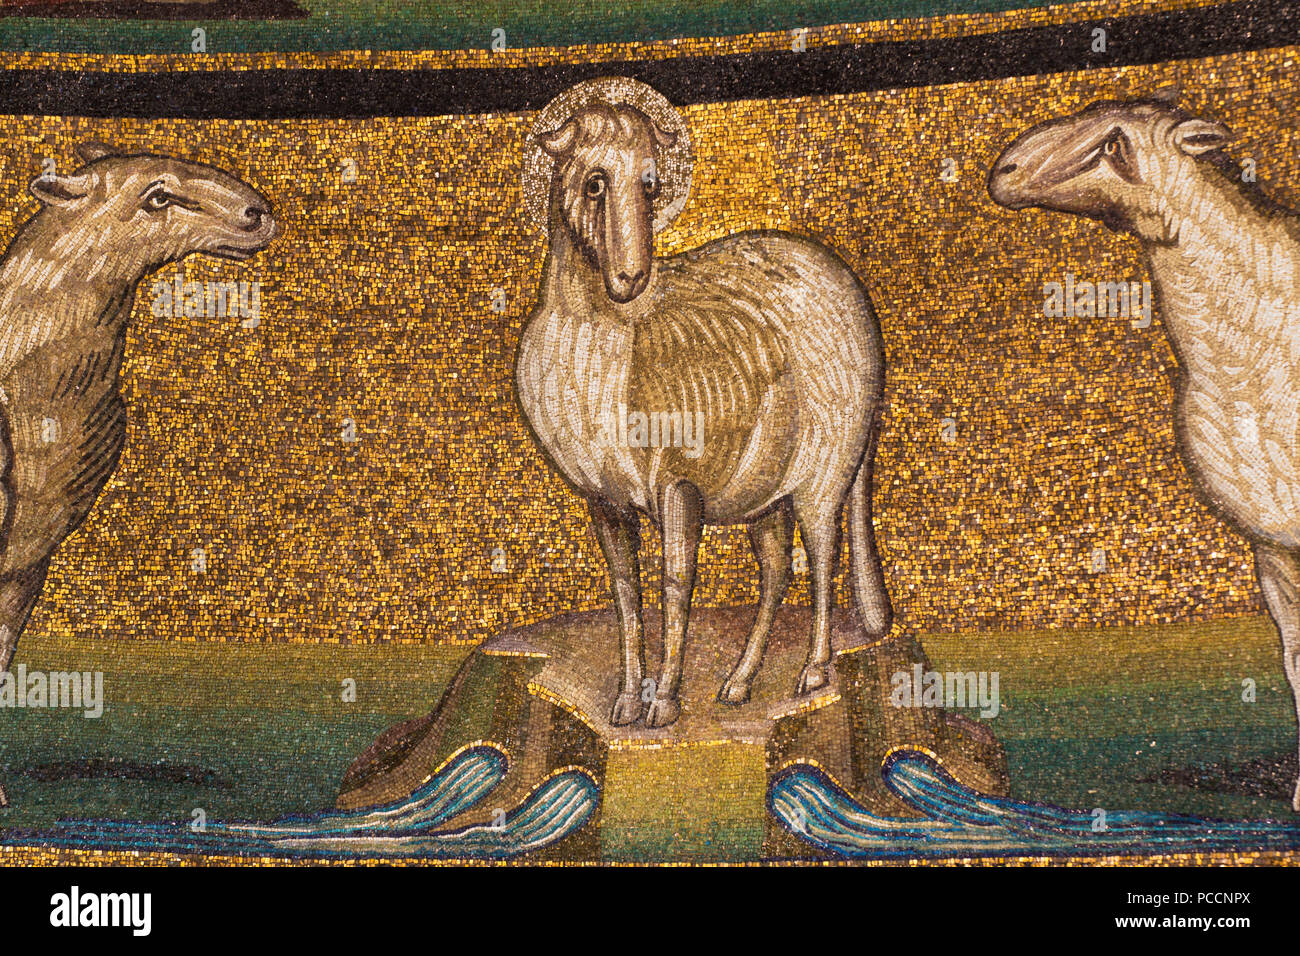 Agnus Dei - Detail des 6. Jahrhunderts Apsis Mosaik (530 AC) - Meisterwerk der frühen christlichen Kunst - Basilika Santi Cosma e Damiano - Rom Stockfoto